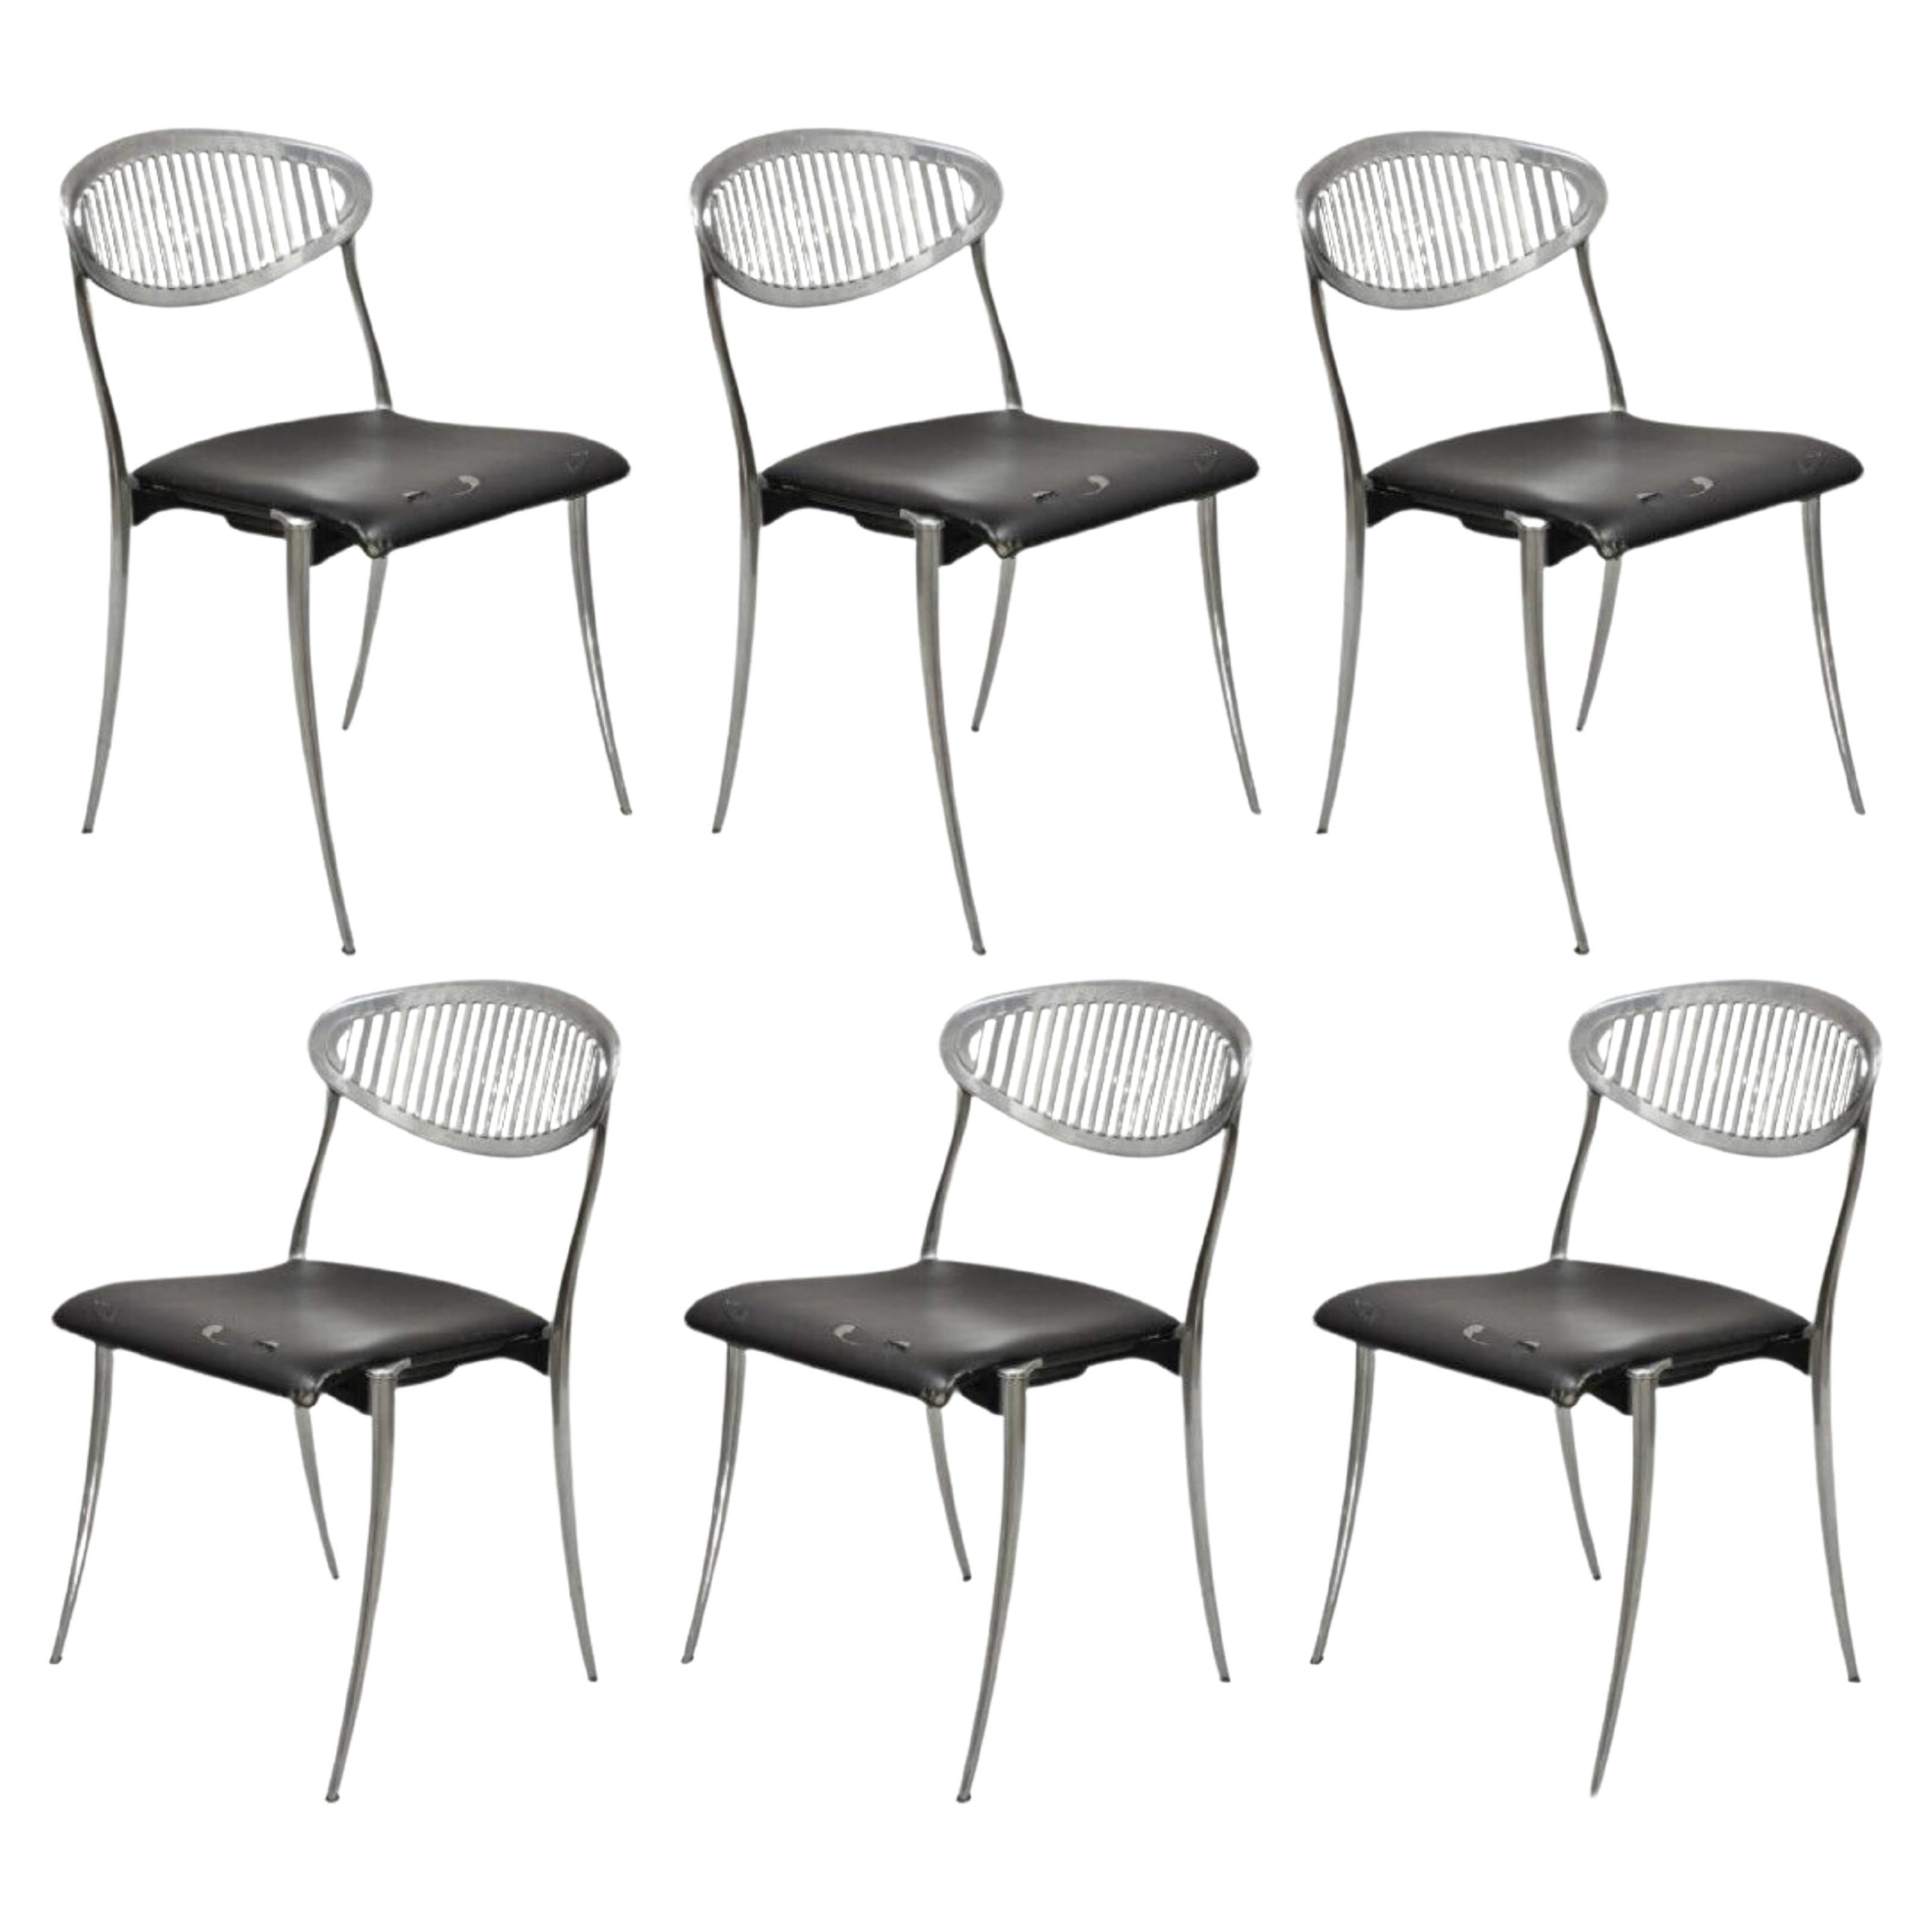 Coro Luigi Origlia Italian Modern Sculpted Aluminum Dining Chairs - Set of 6 For Sale